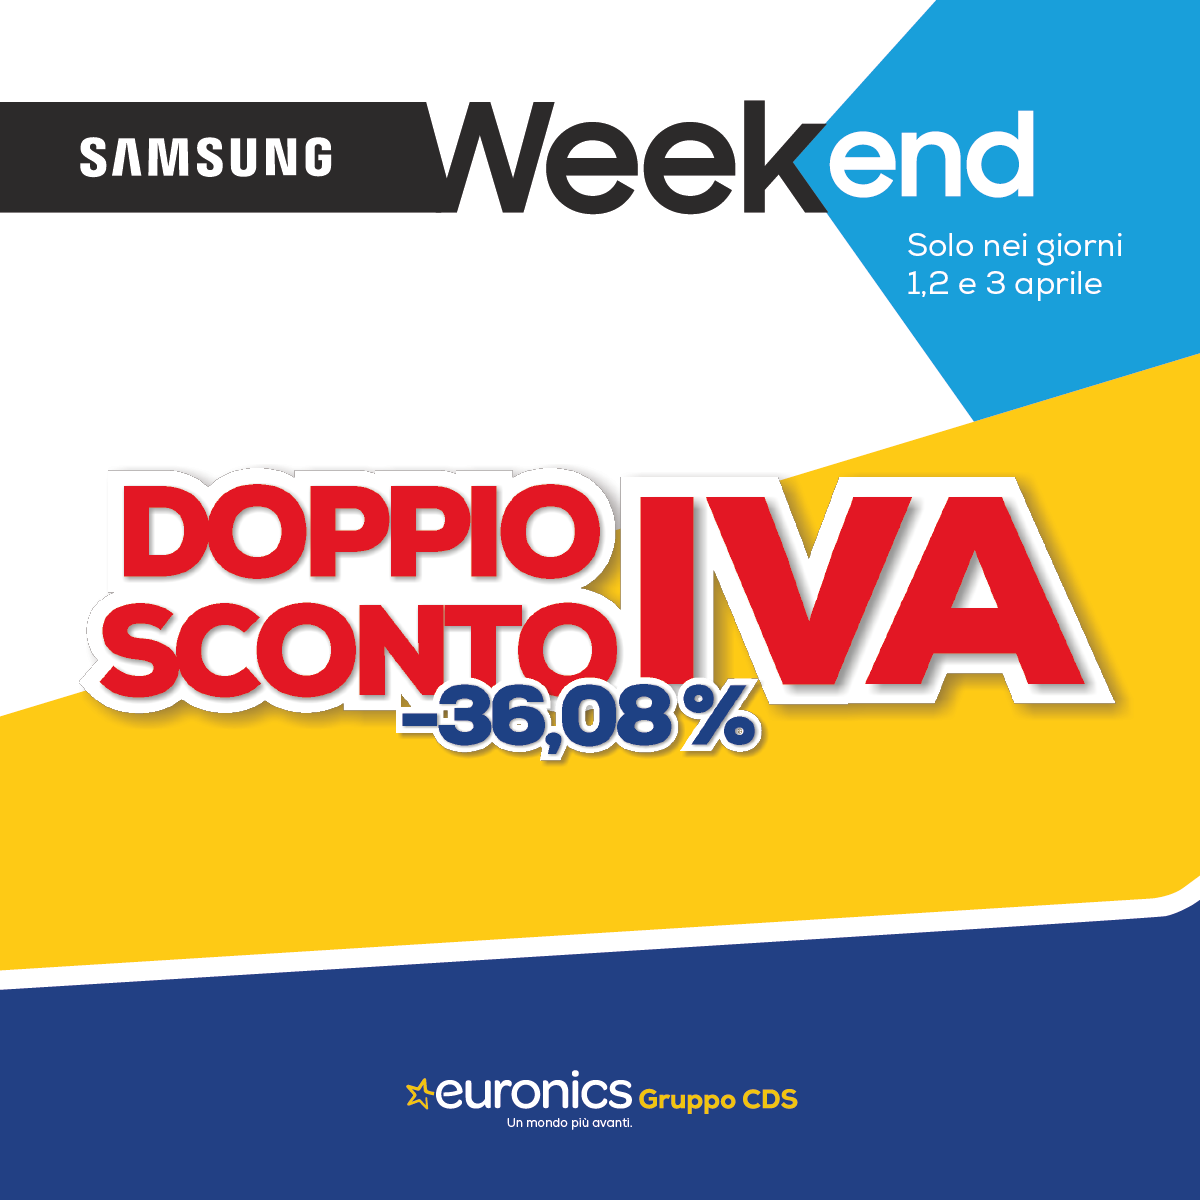 Euronics doppio sconto IVA Samsung Weekend